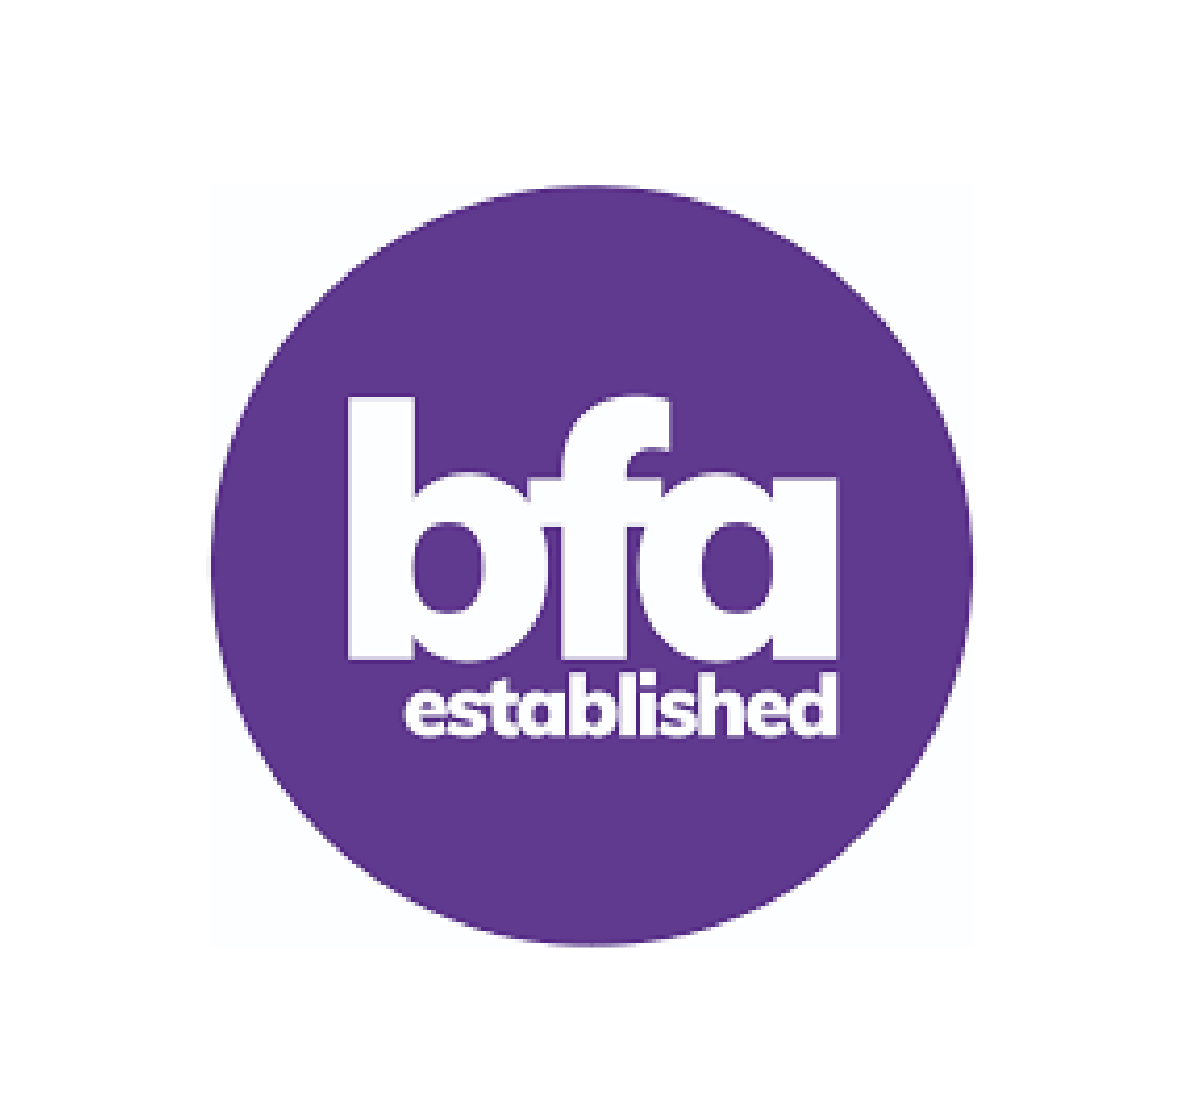 bfa established logo